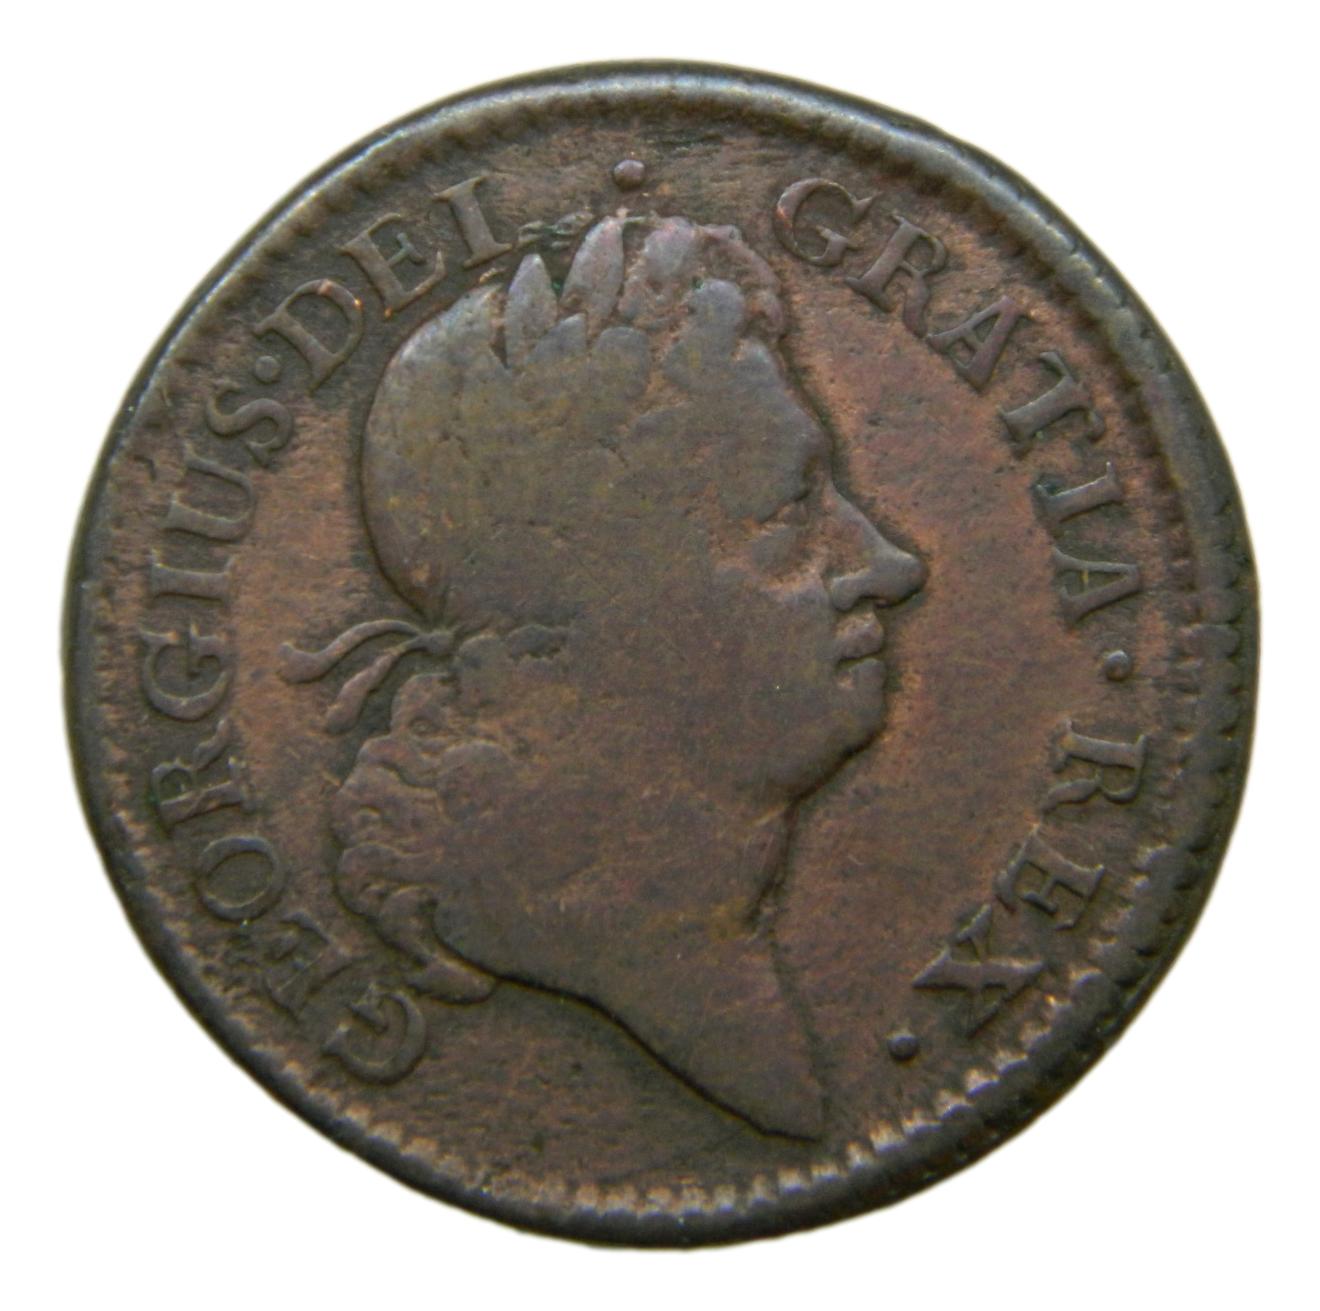 1723 - IRLANDA - HALF PENNY - AMERICAN COLONIAL - GEORGE I - HIBERNIA - S9/412